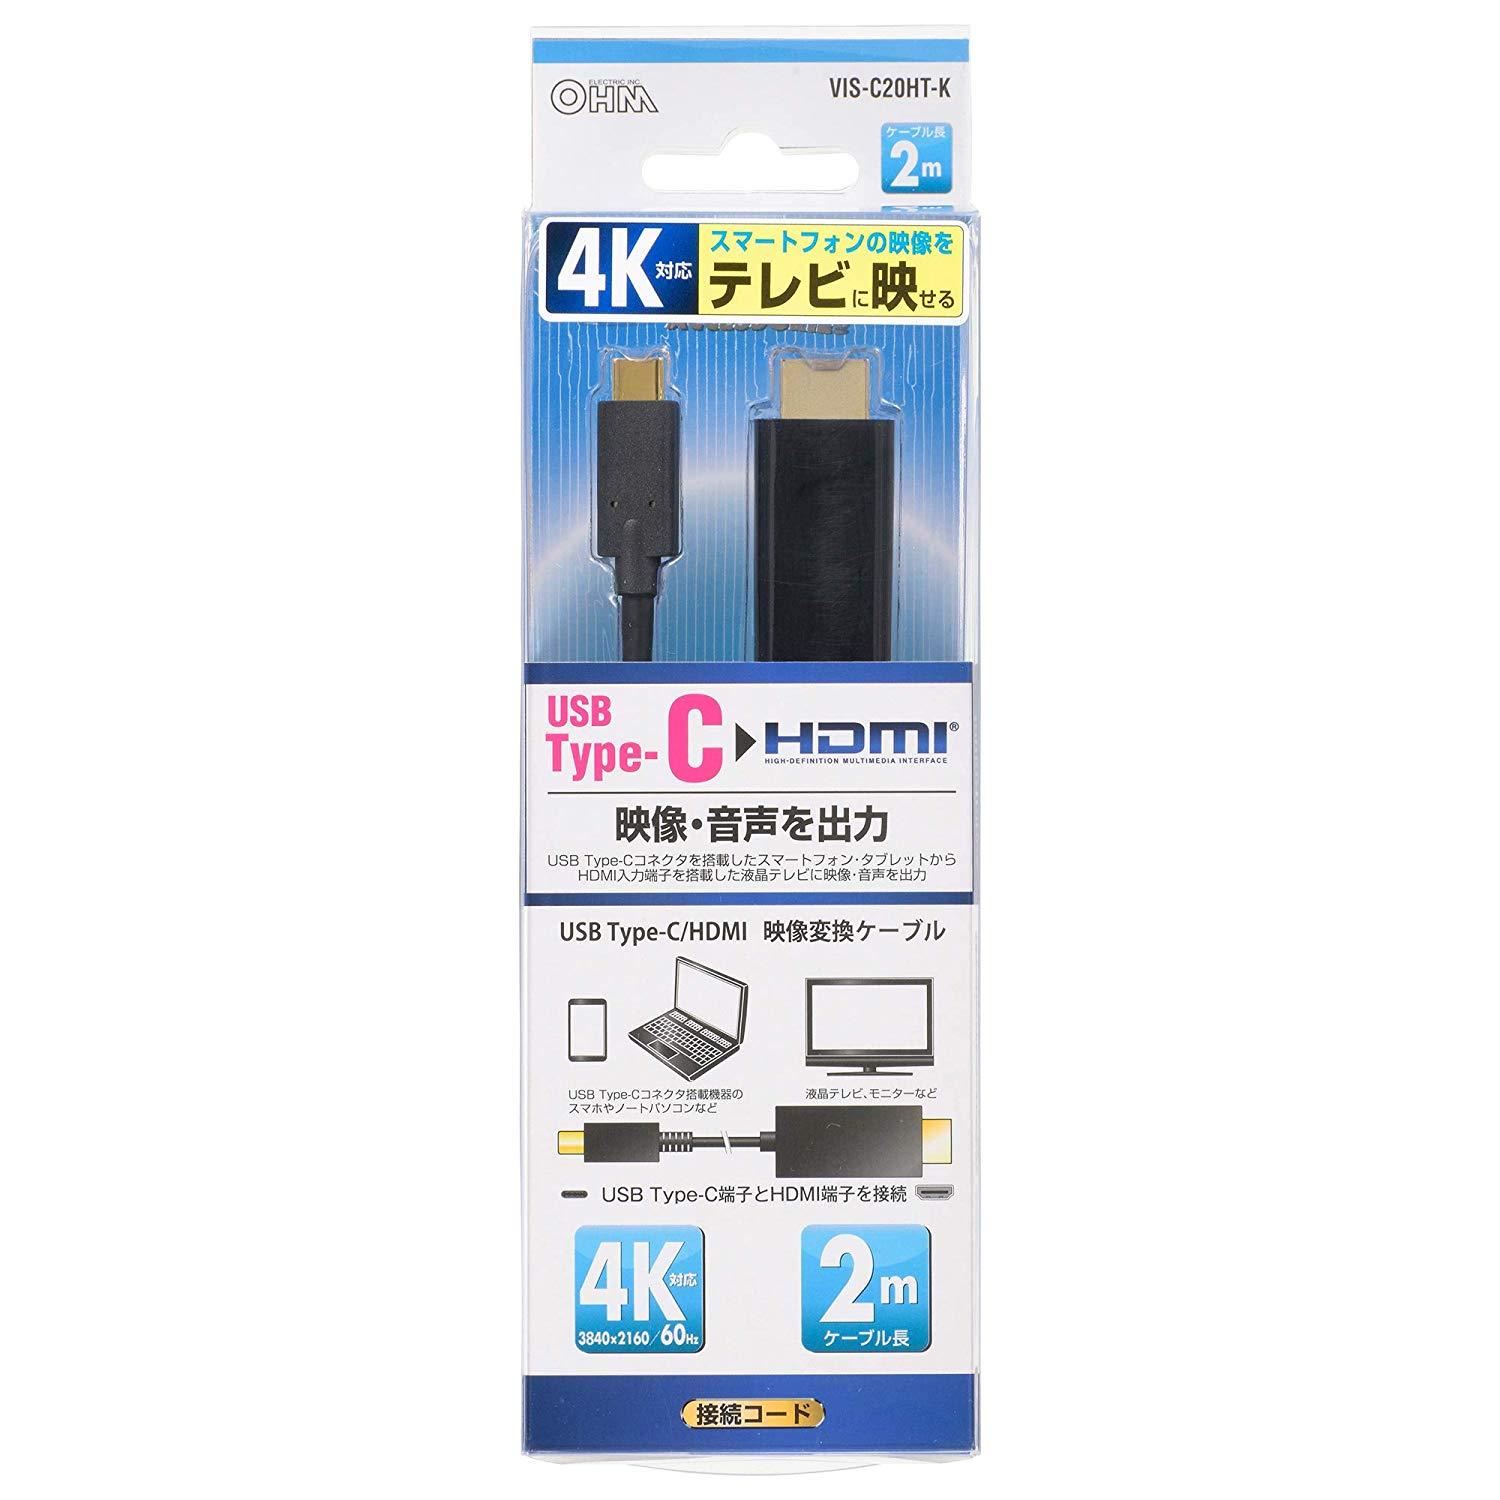 USB Type-C/HDMI fϊP[u(2m) VIS-C20HT-K